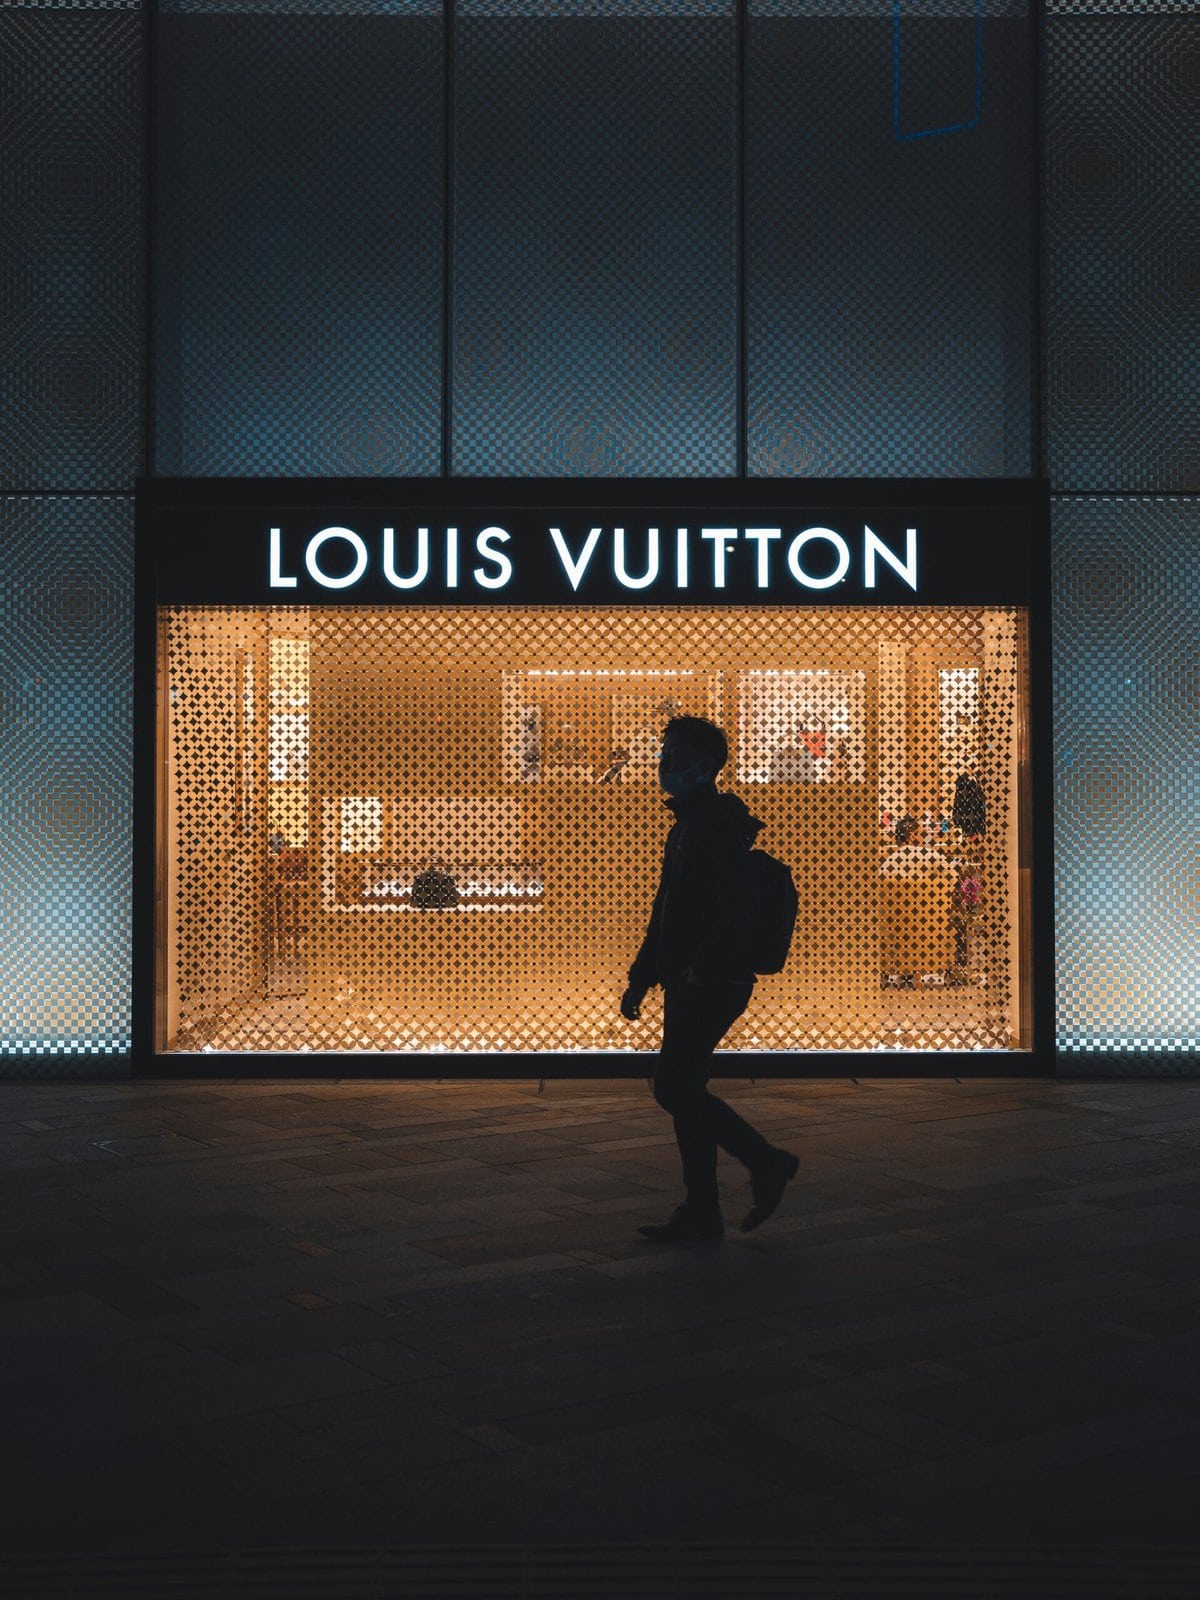 Louis Vuitton Tokyo Shinjuku store, Japan